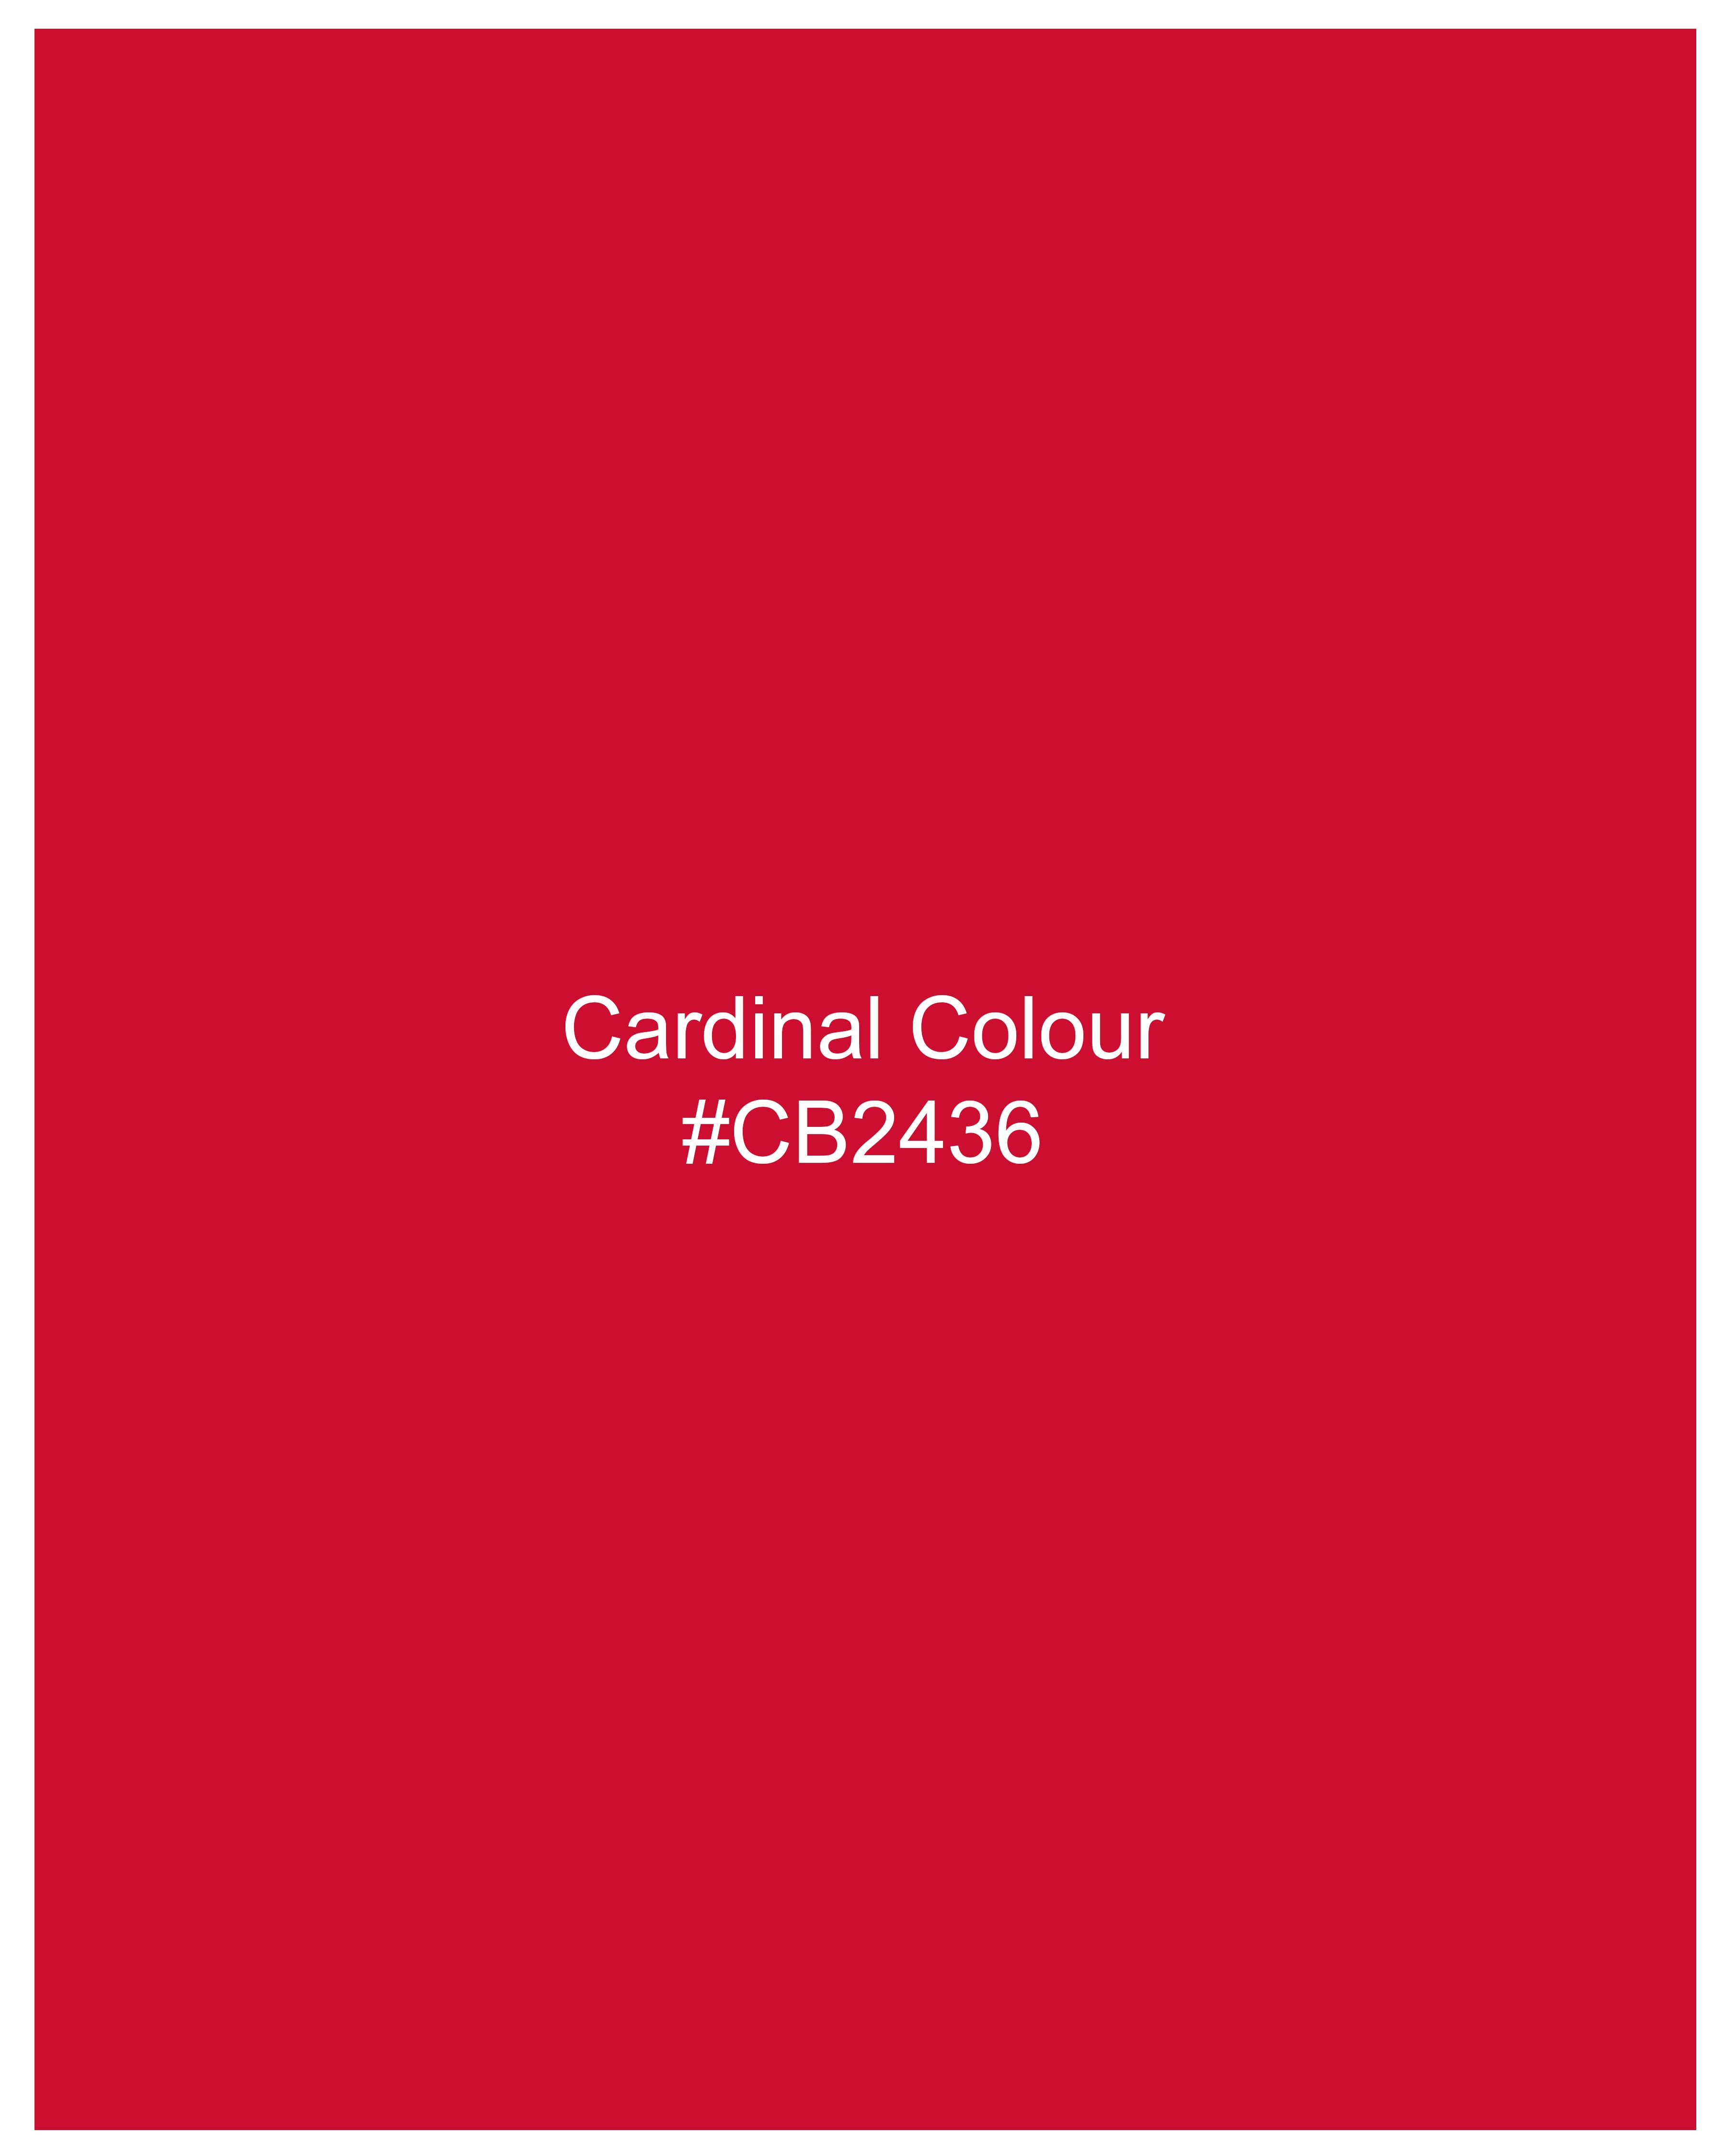 Cardinal Red Royal Oxford Shorts SR253-28, SR253-30, SR253-32, SR253-34, SR253-36, SR253-38, SR253-40, SR253-42, SR253-44